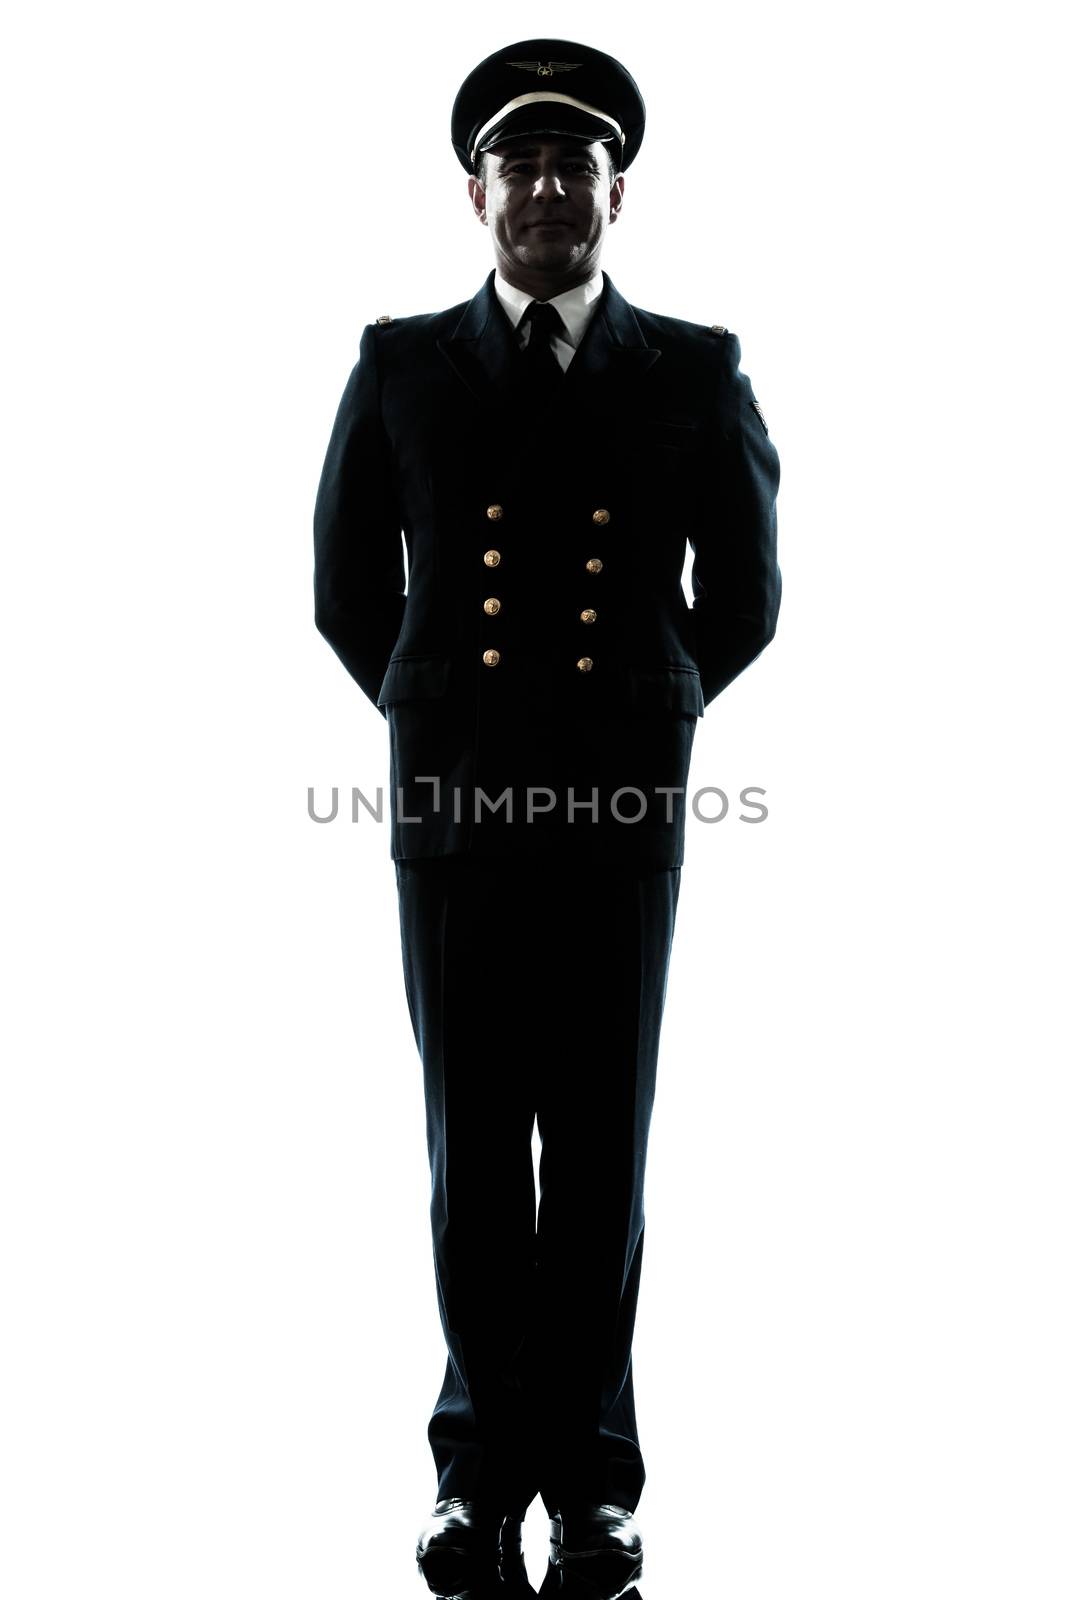 man in airline pilot uniform silhouette by PIXSTILL